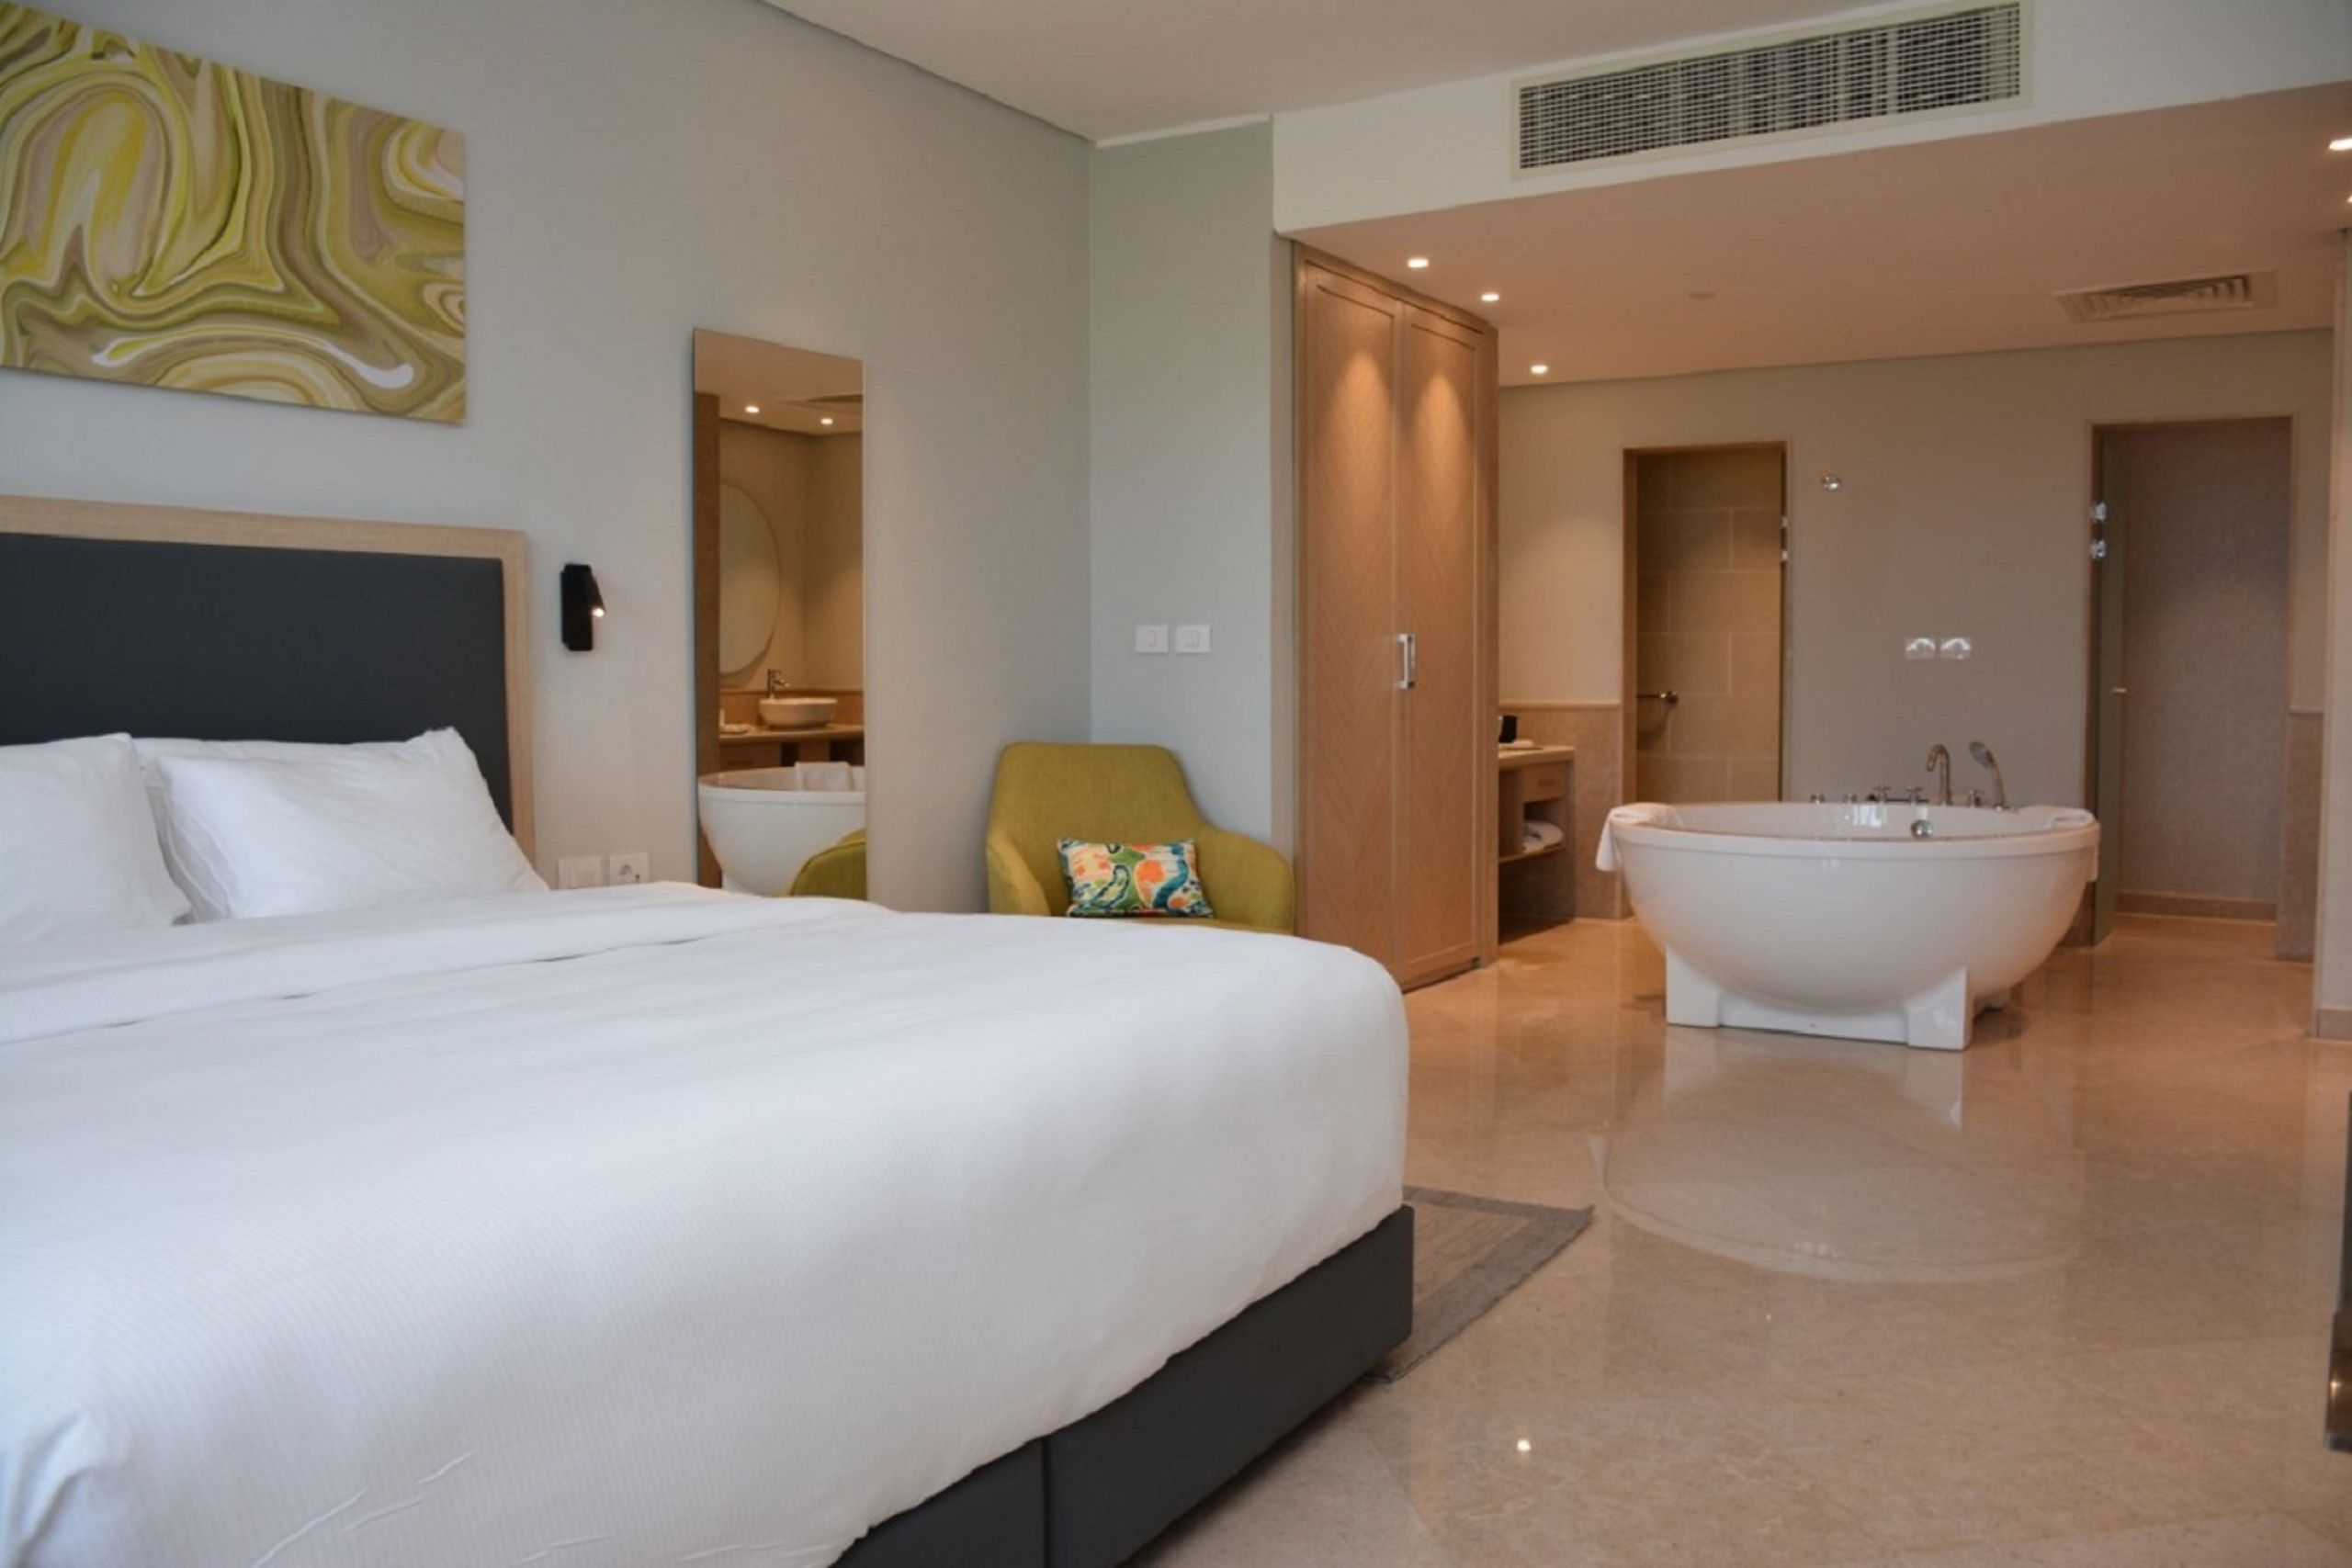 Steigenberger Aldau Beach Hotel - Hurghada - Egitto - La Suite - letto e bagno